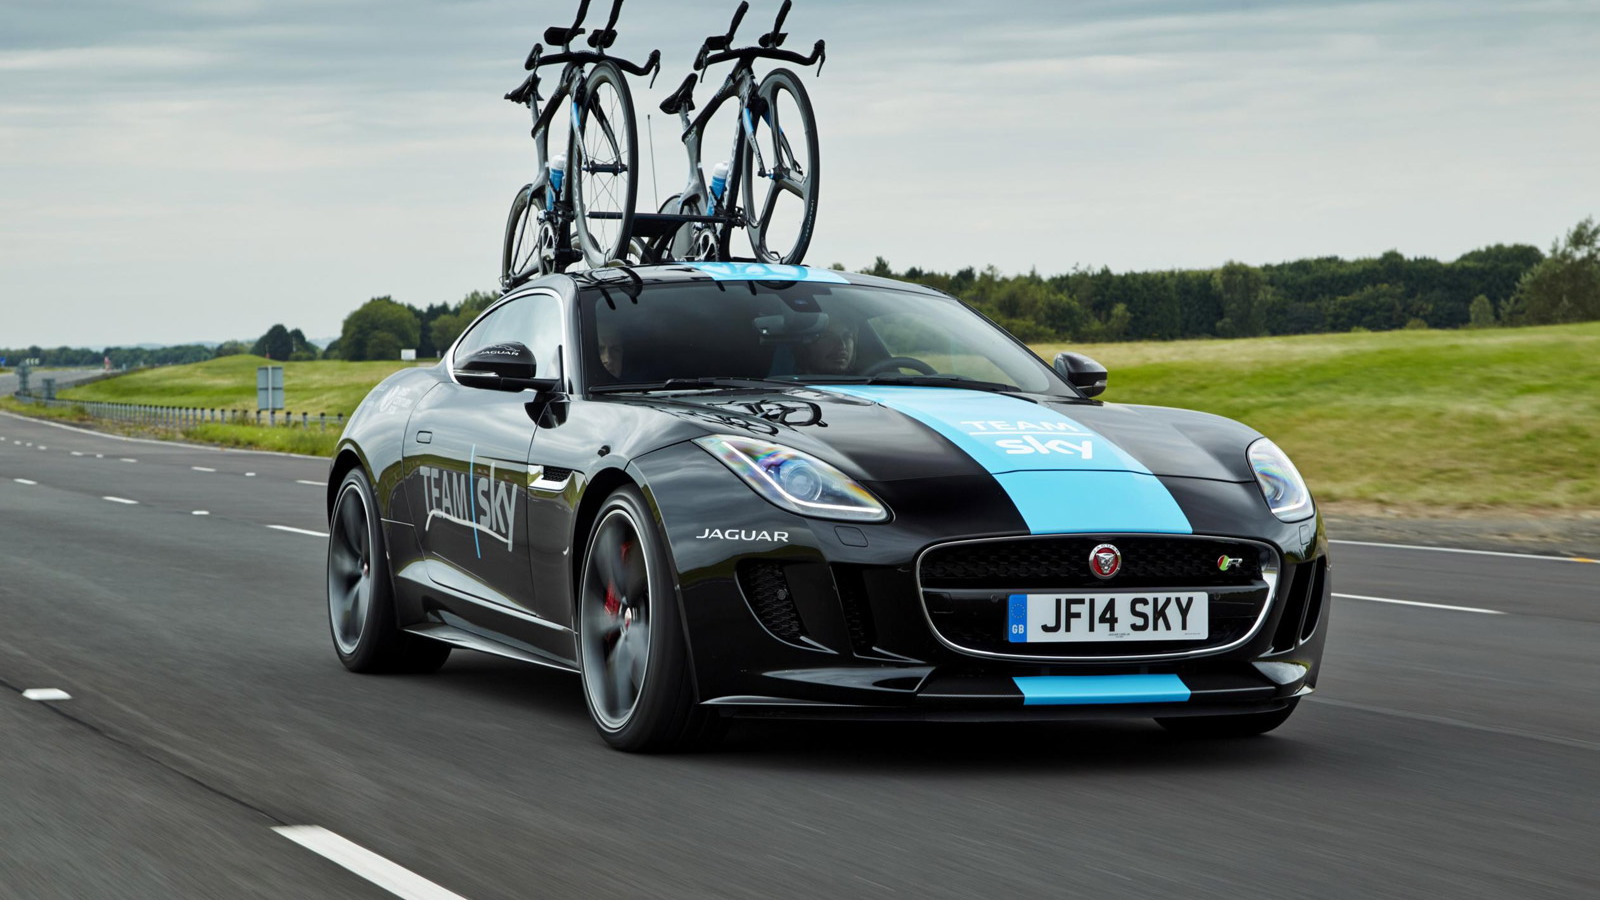 Jaguar F-Type built by SVO for Team Sky Tour de France cycling team